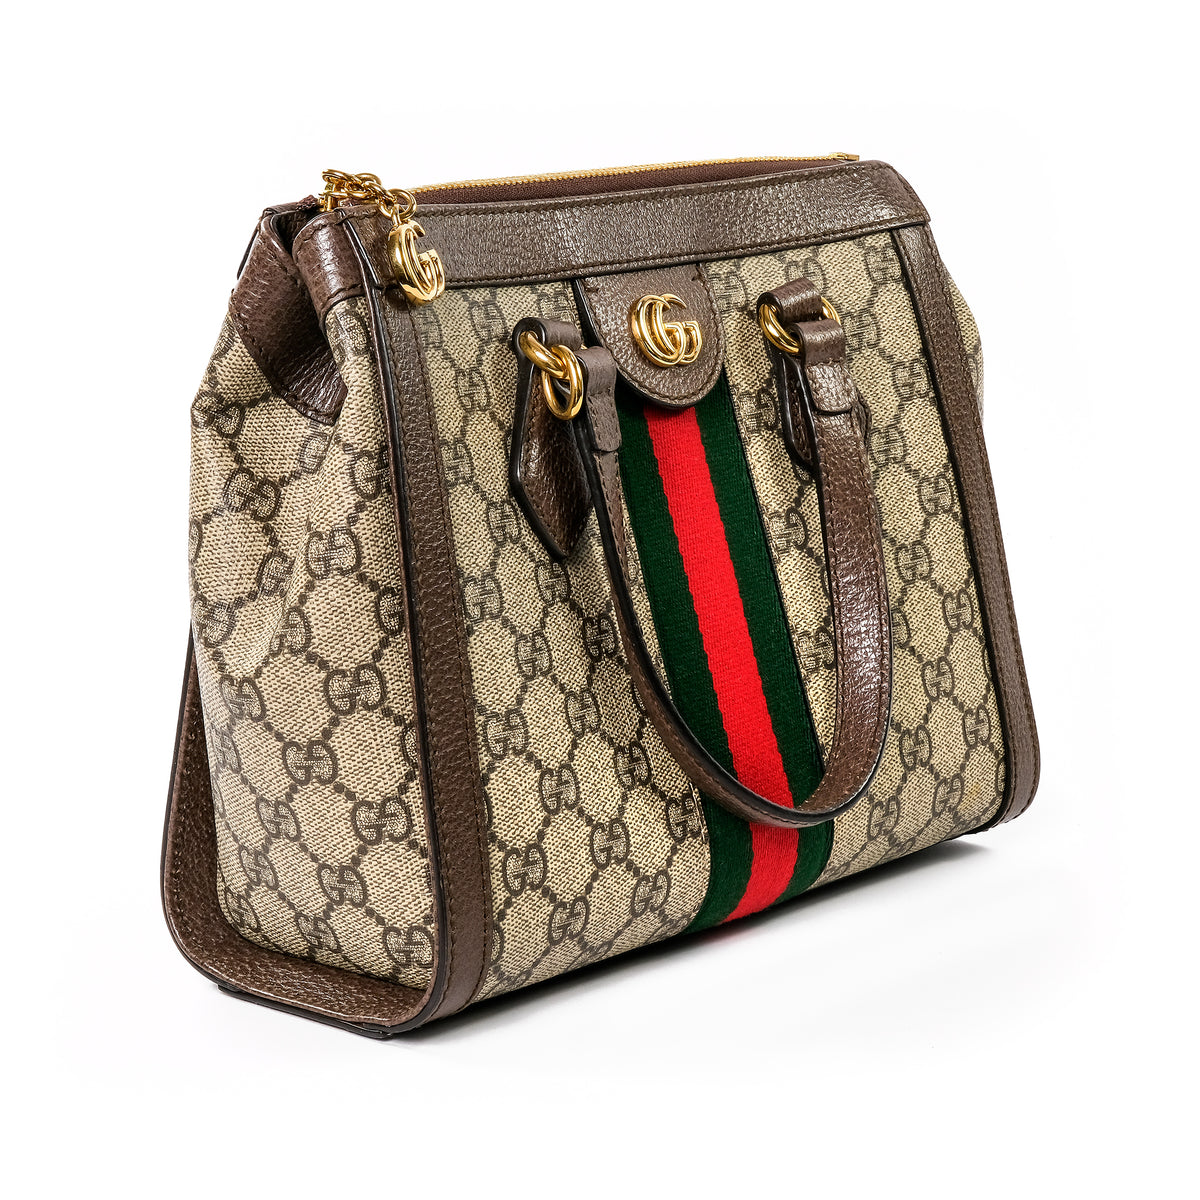 Gucci GG Ophidia Small Tote Bag